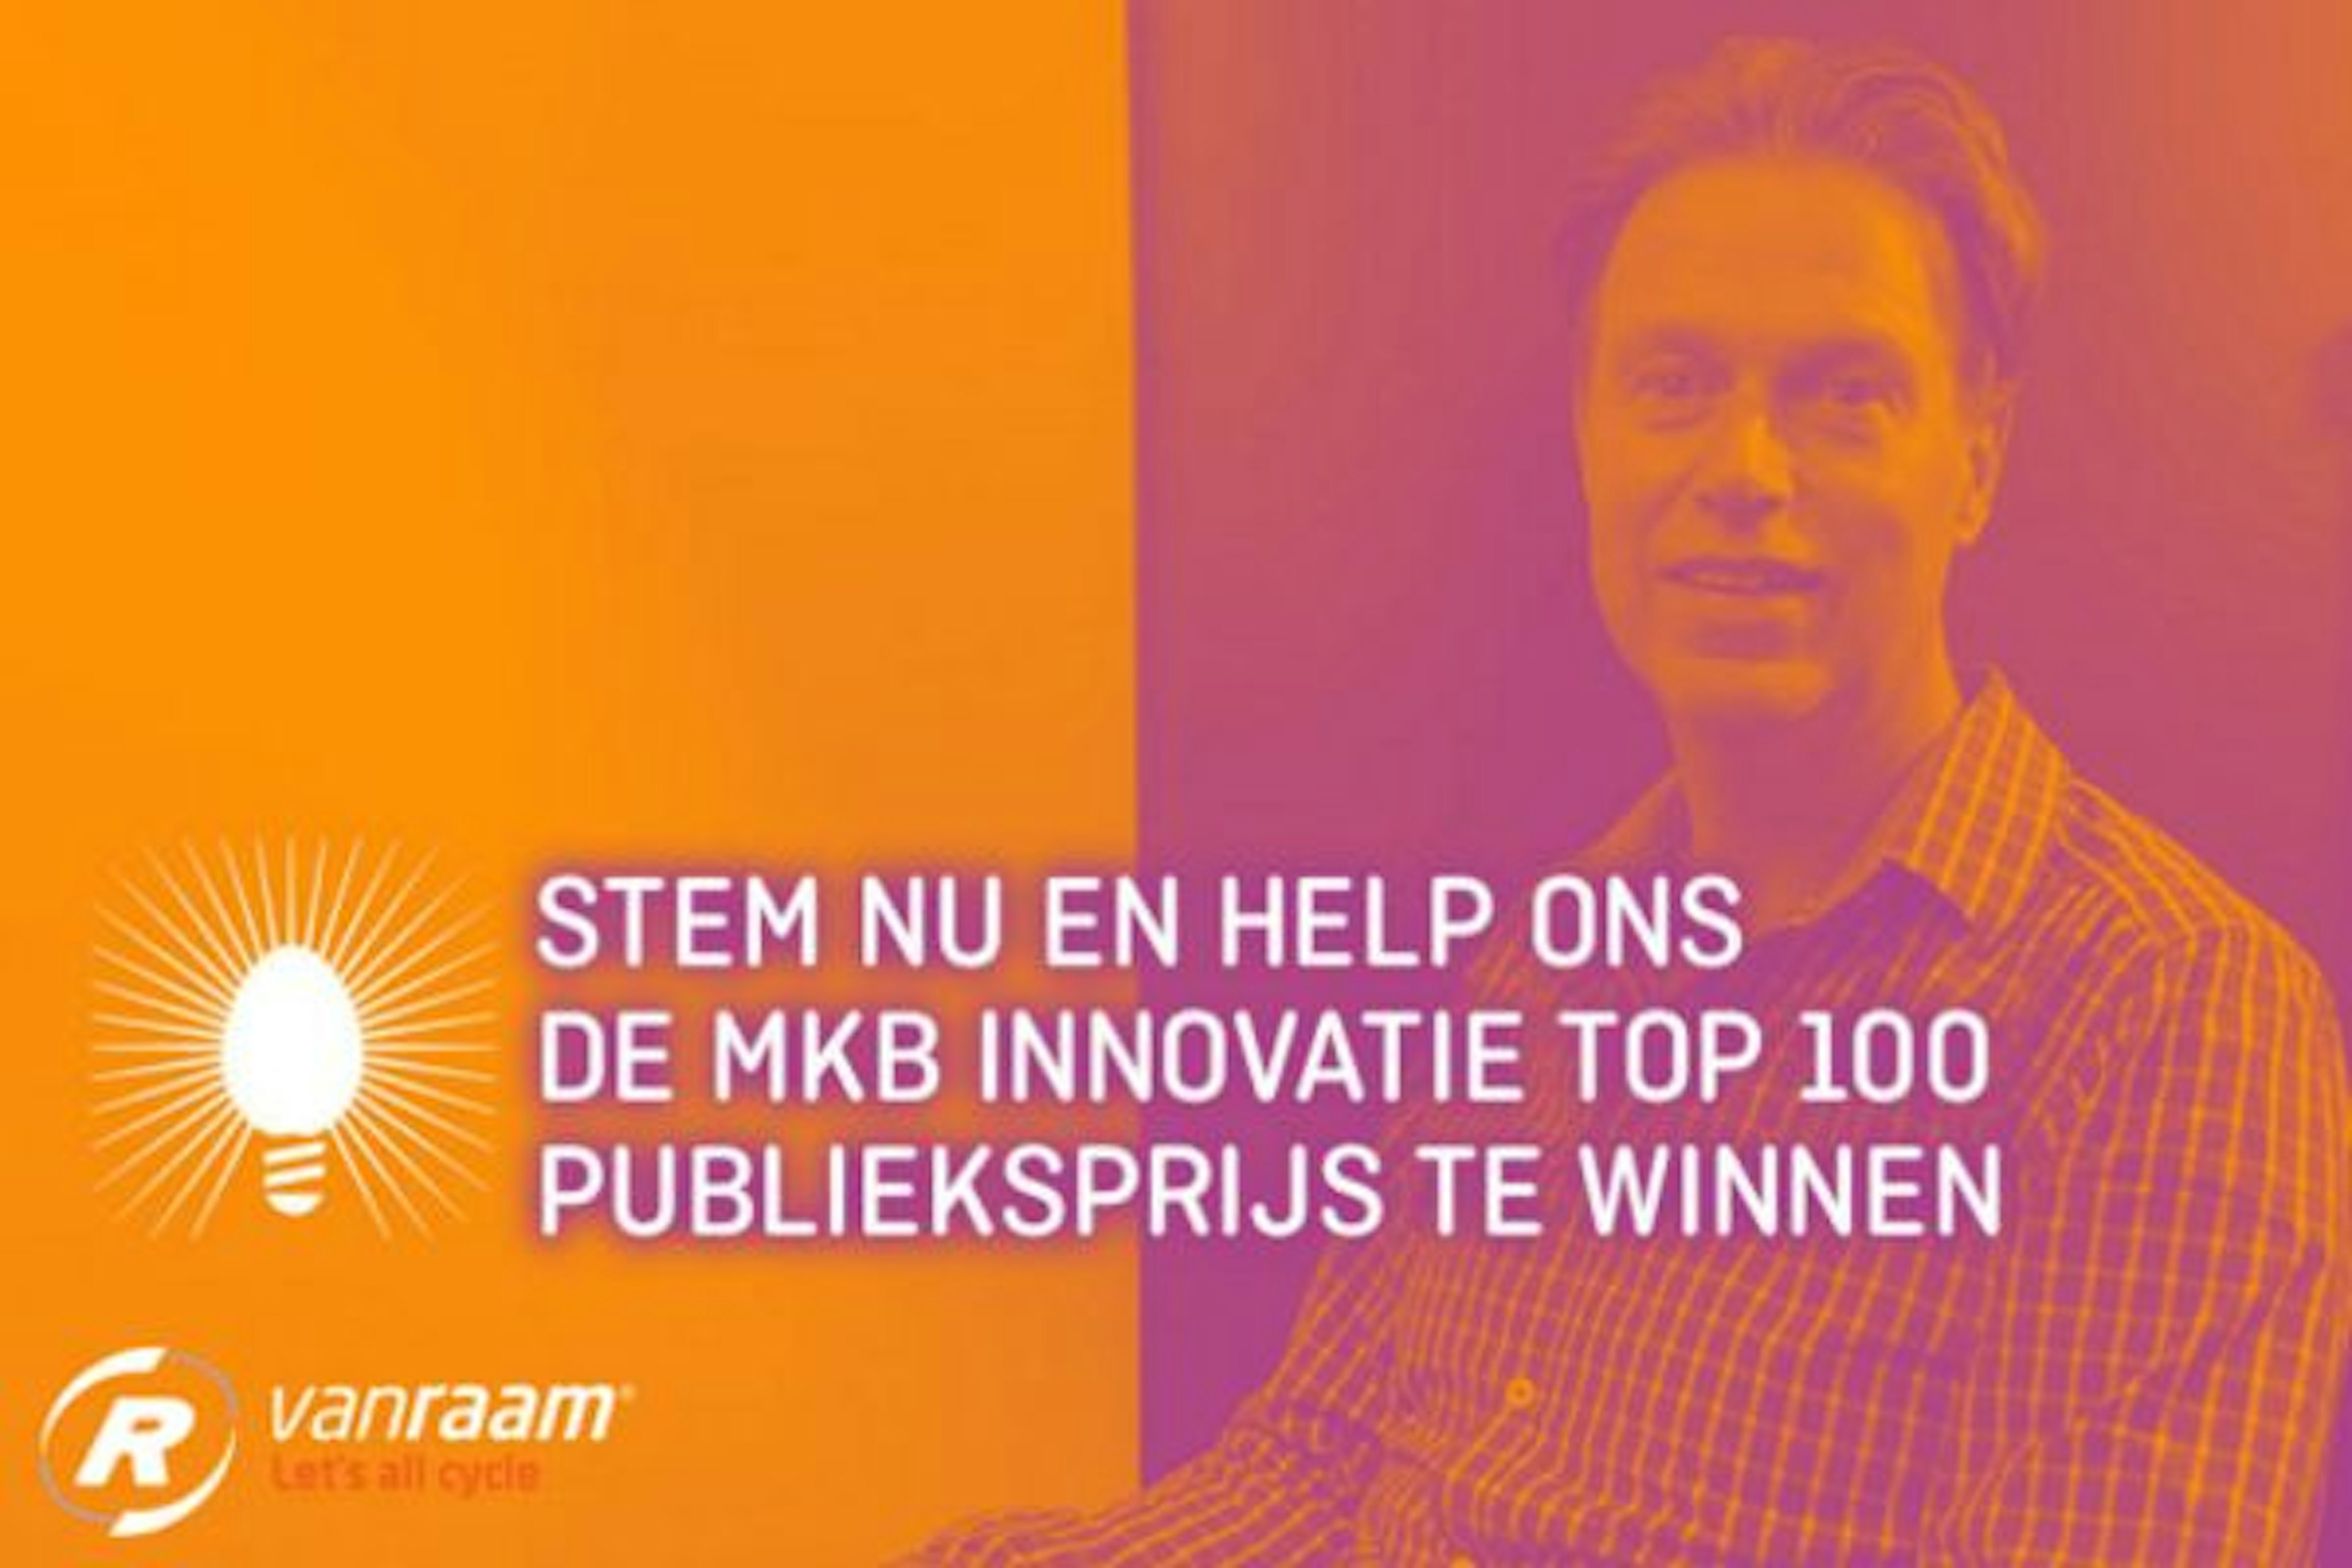 MKB Innovatie Top 100 publieksprijs